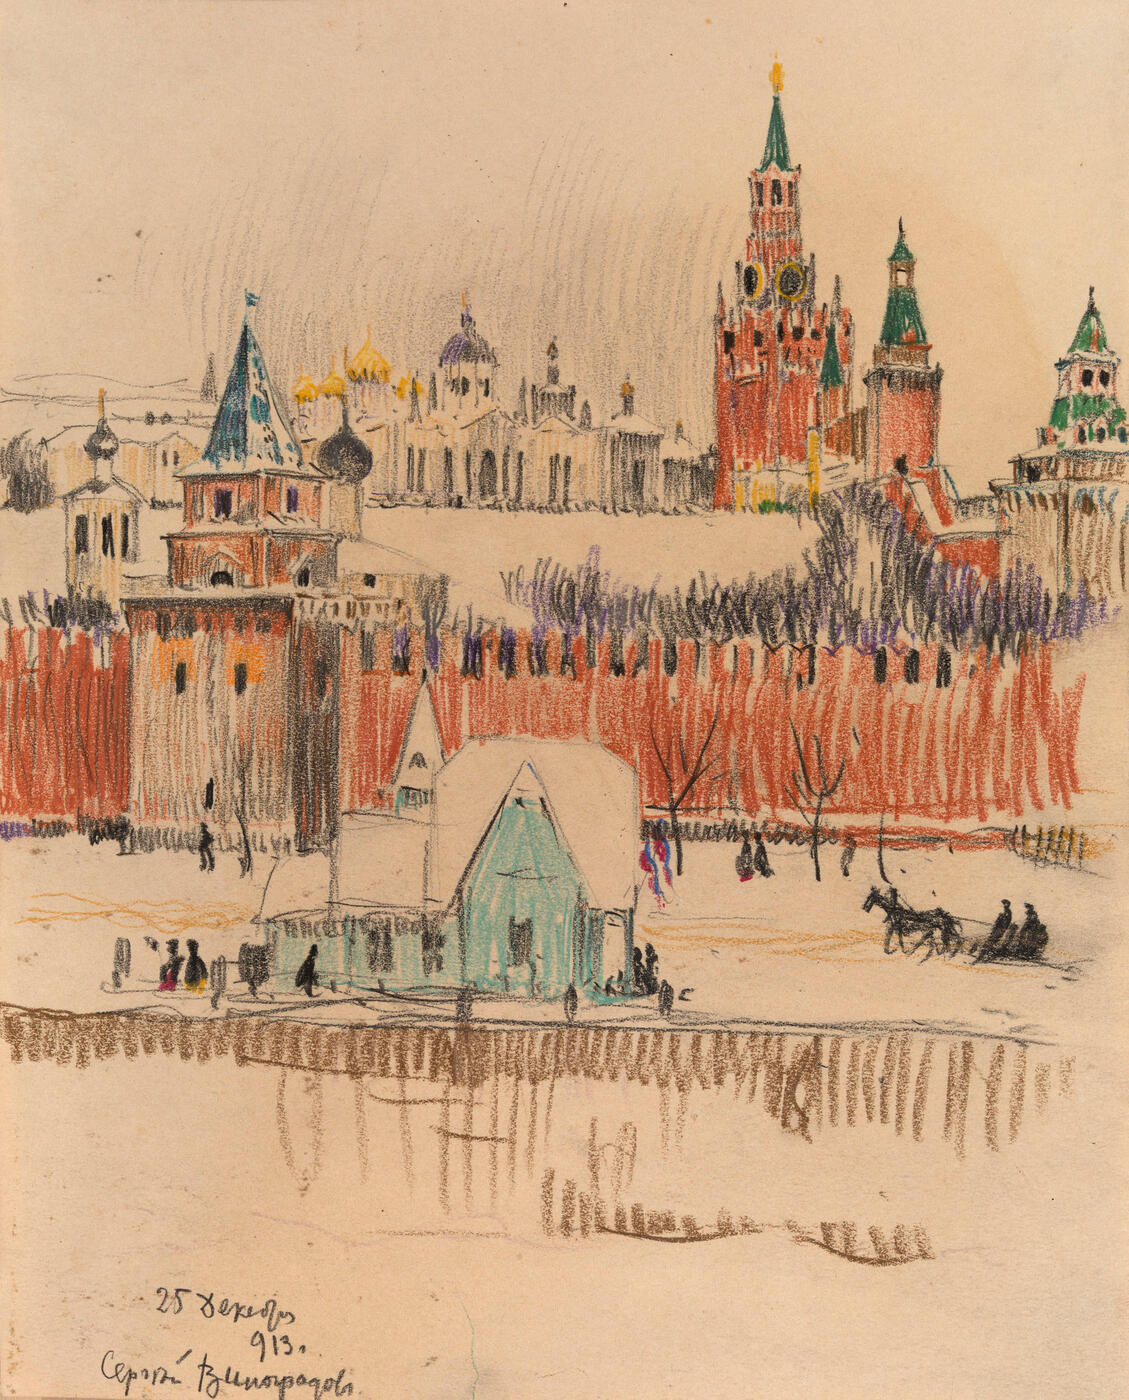 View of the Kremlin in Winter